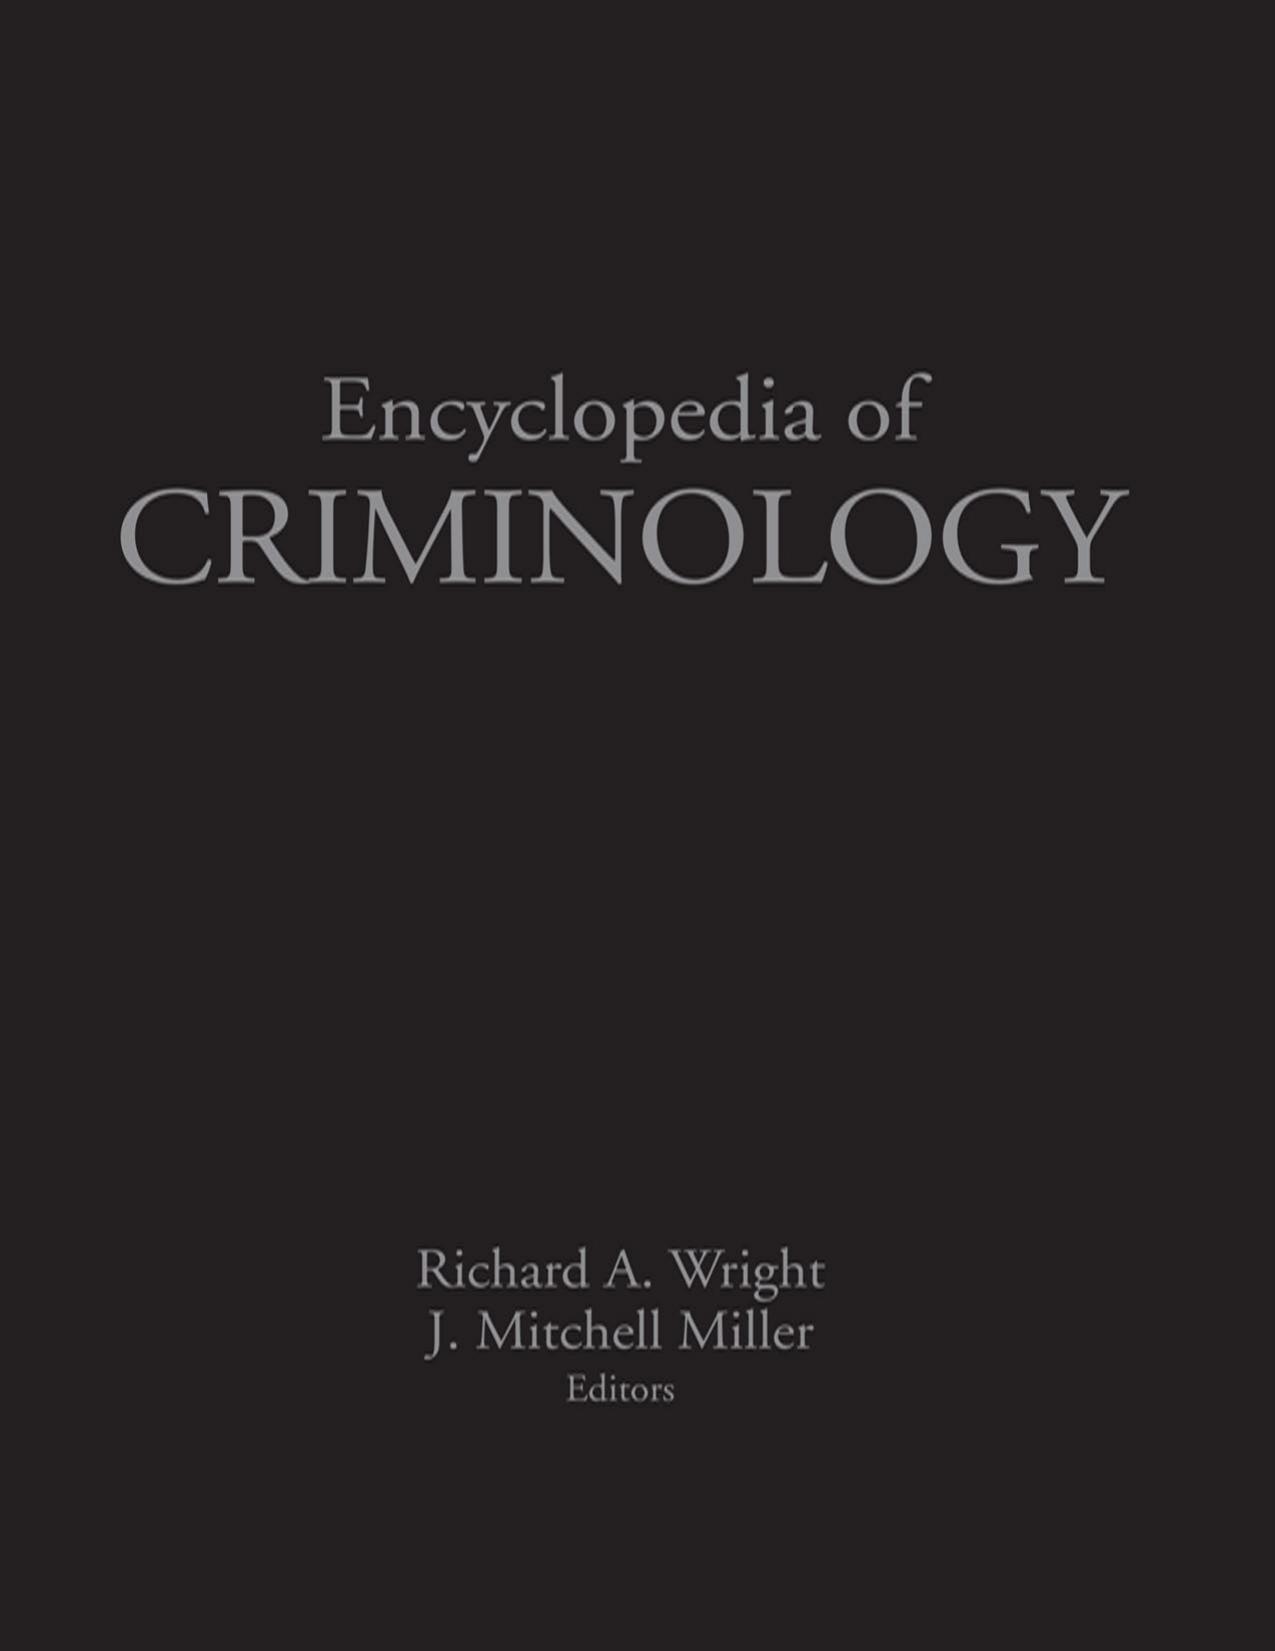 Encyclopedia of Criminology